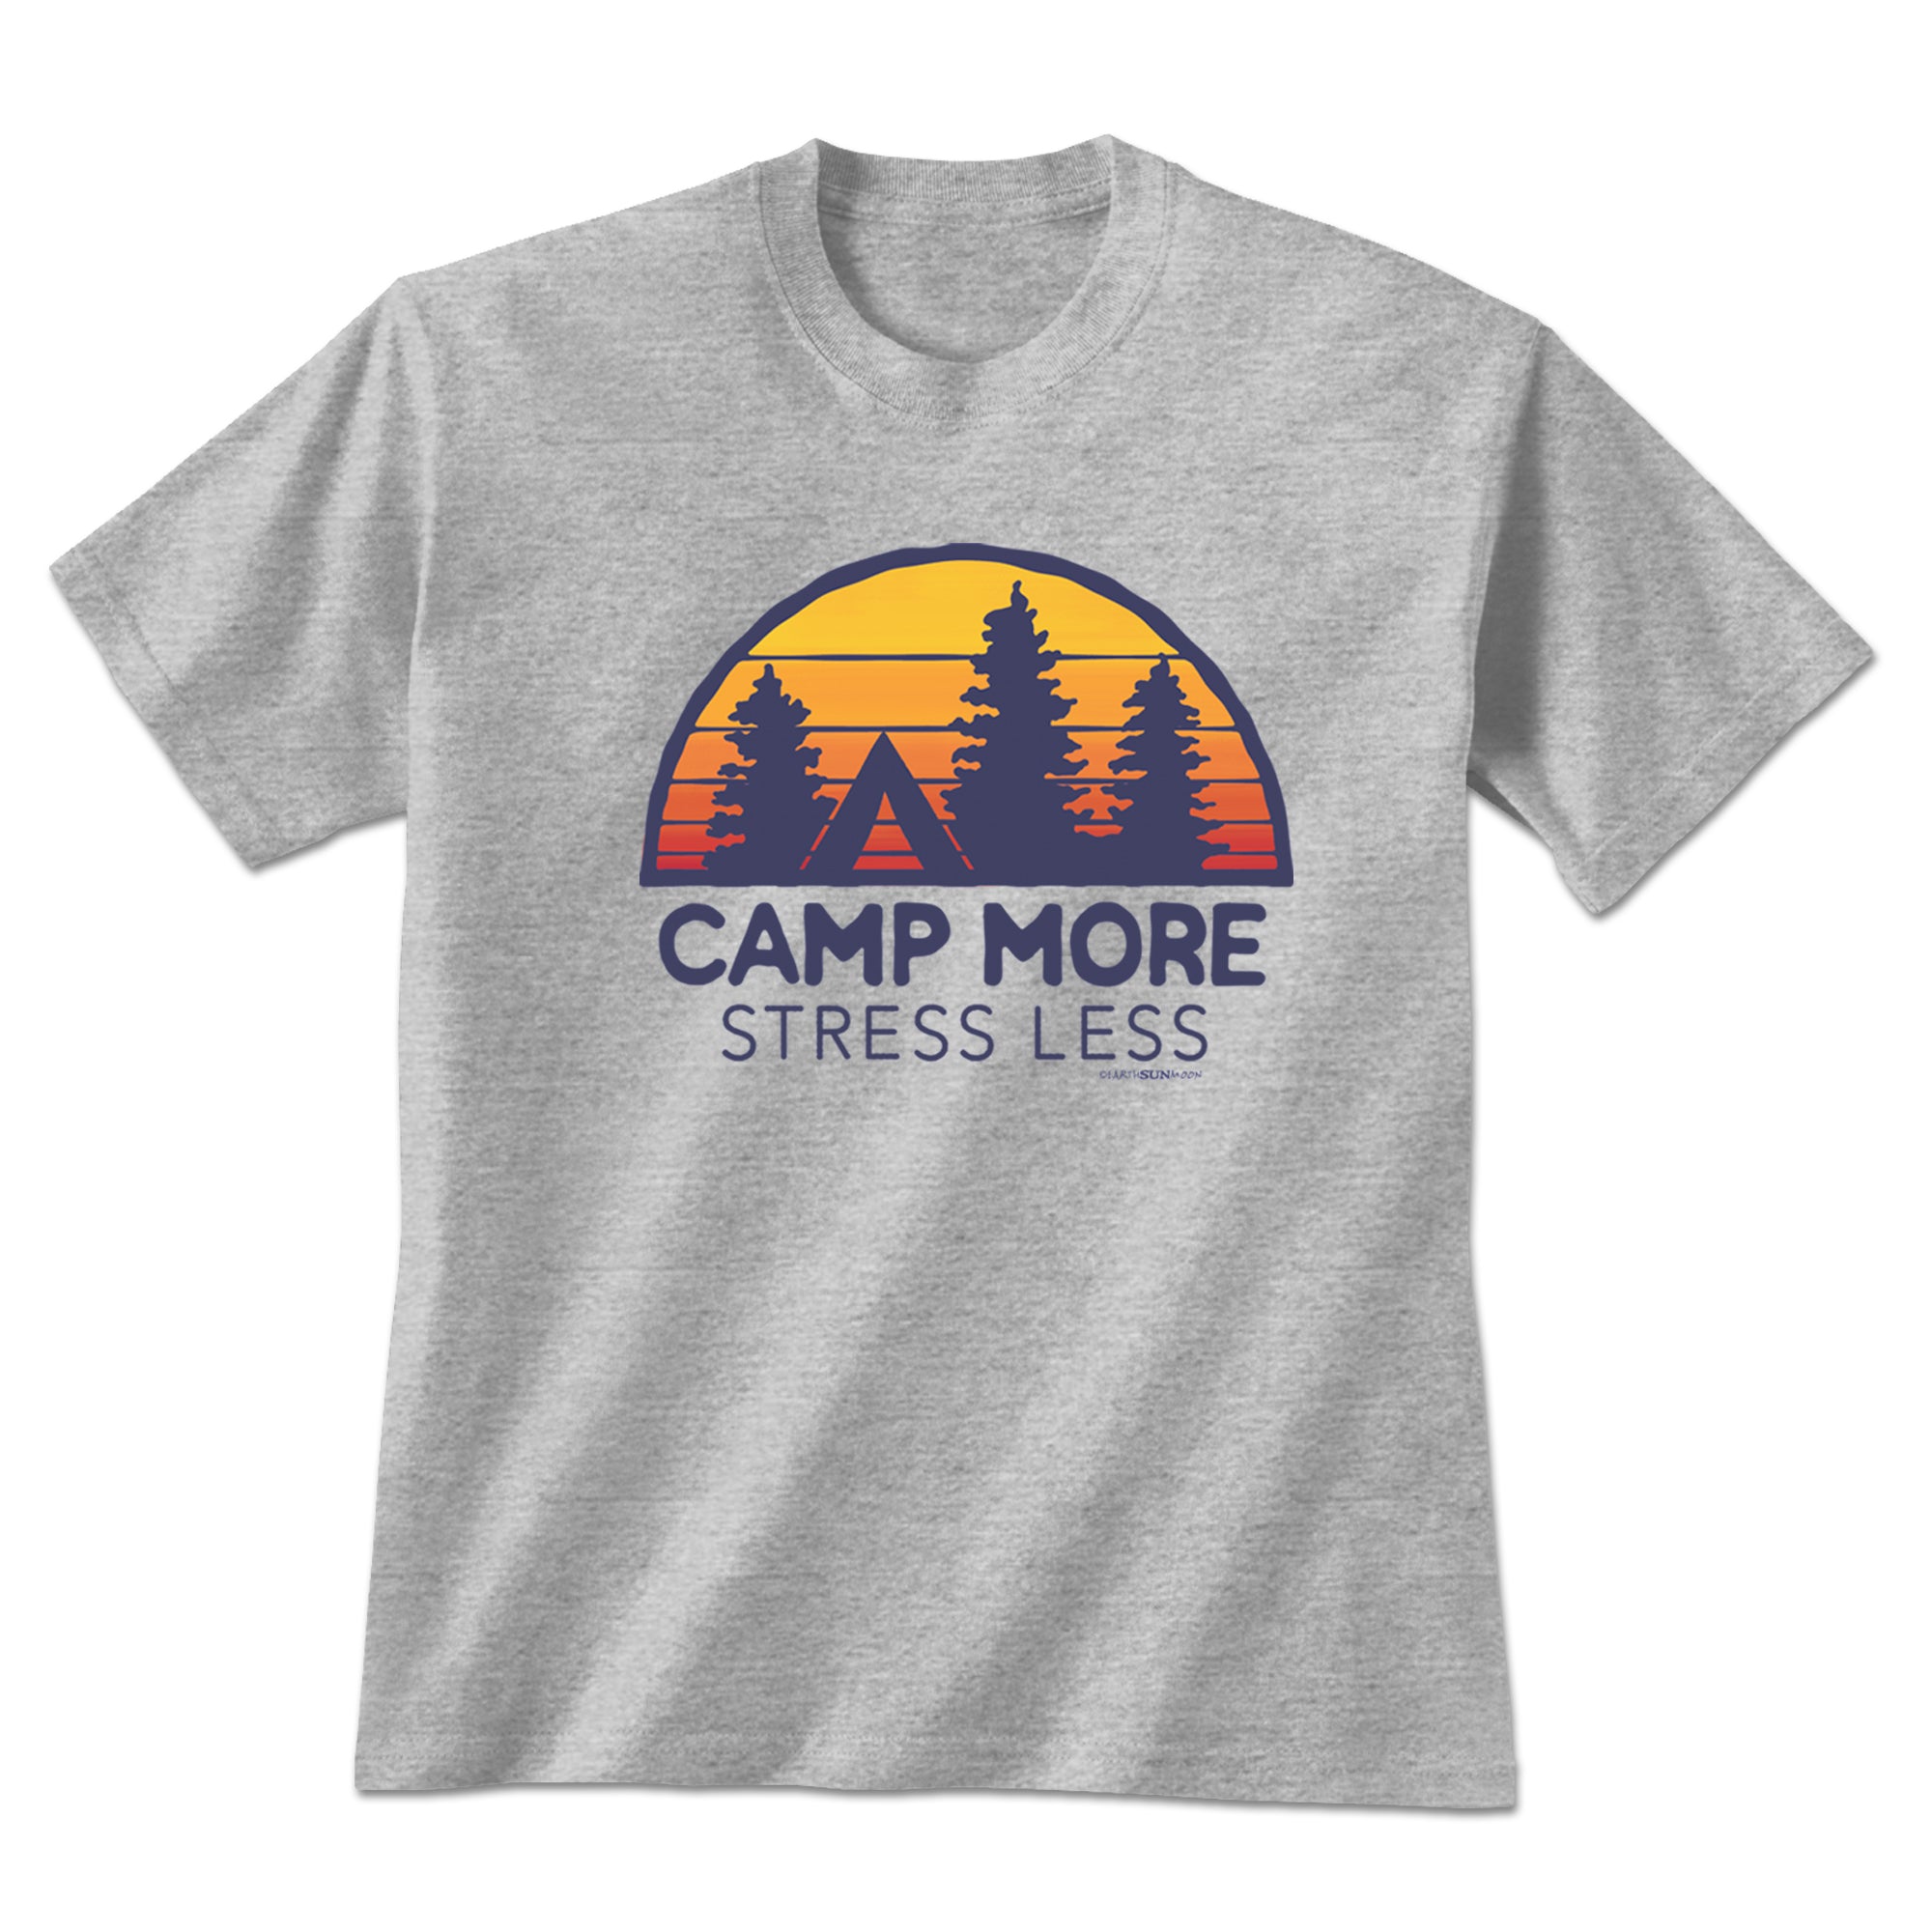 Camp More Stress Less T-Shirt - Sports Grey - XXL